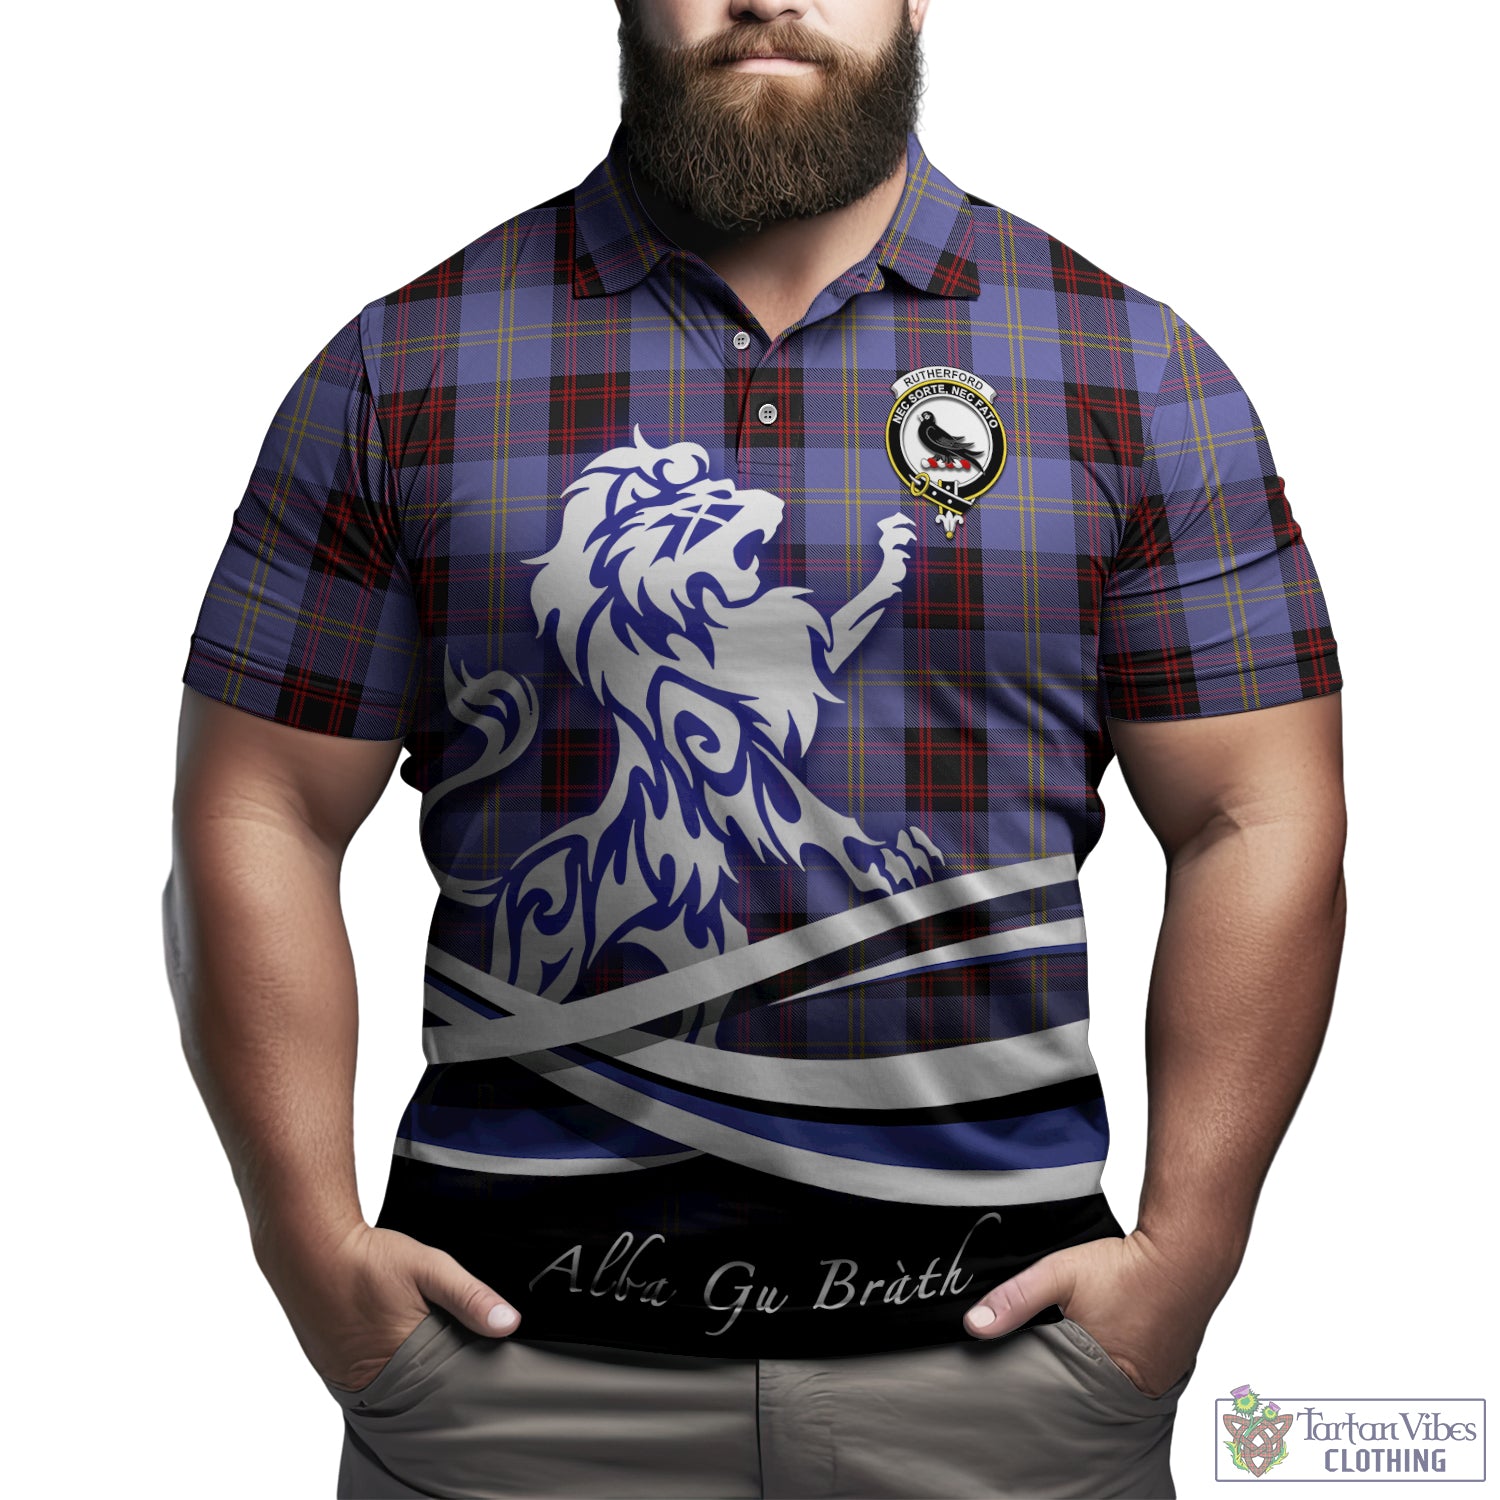 rutherford-tartan-polo-shirt-with-alba-gu-brath-regal-lion-emblem